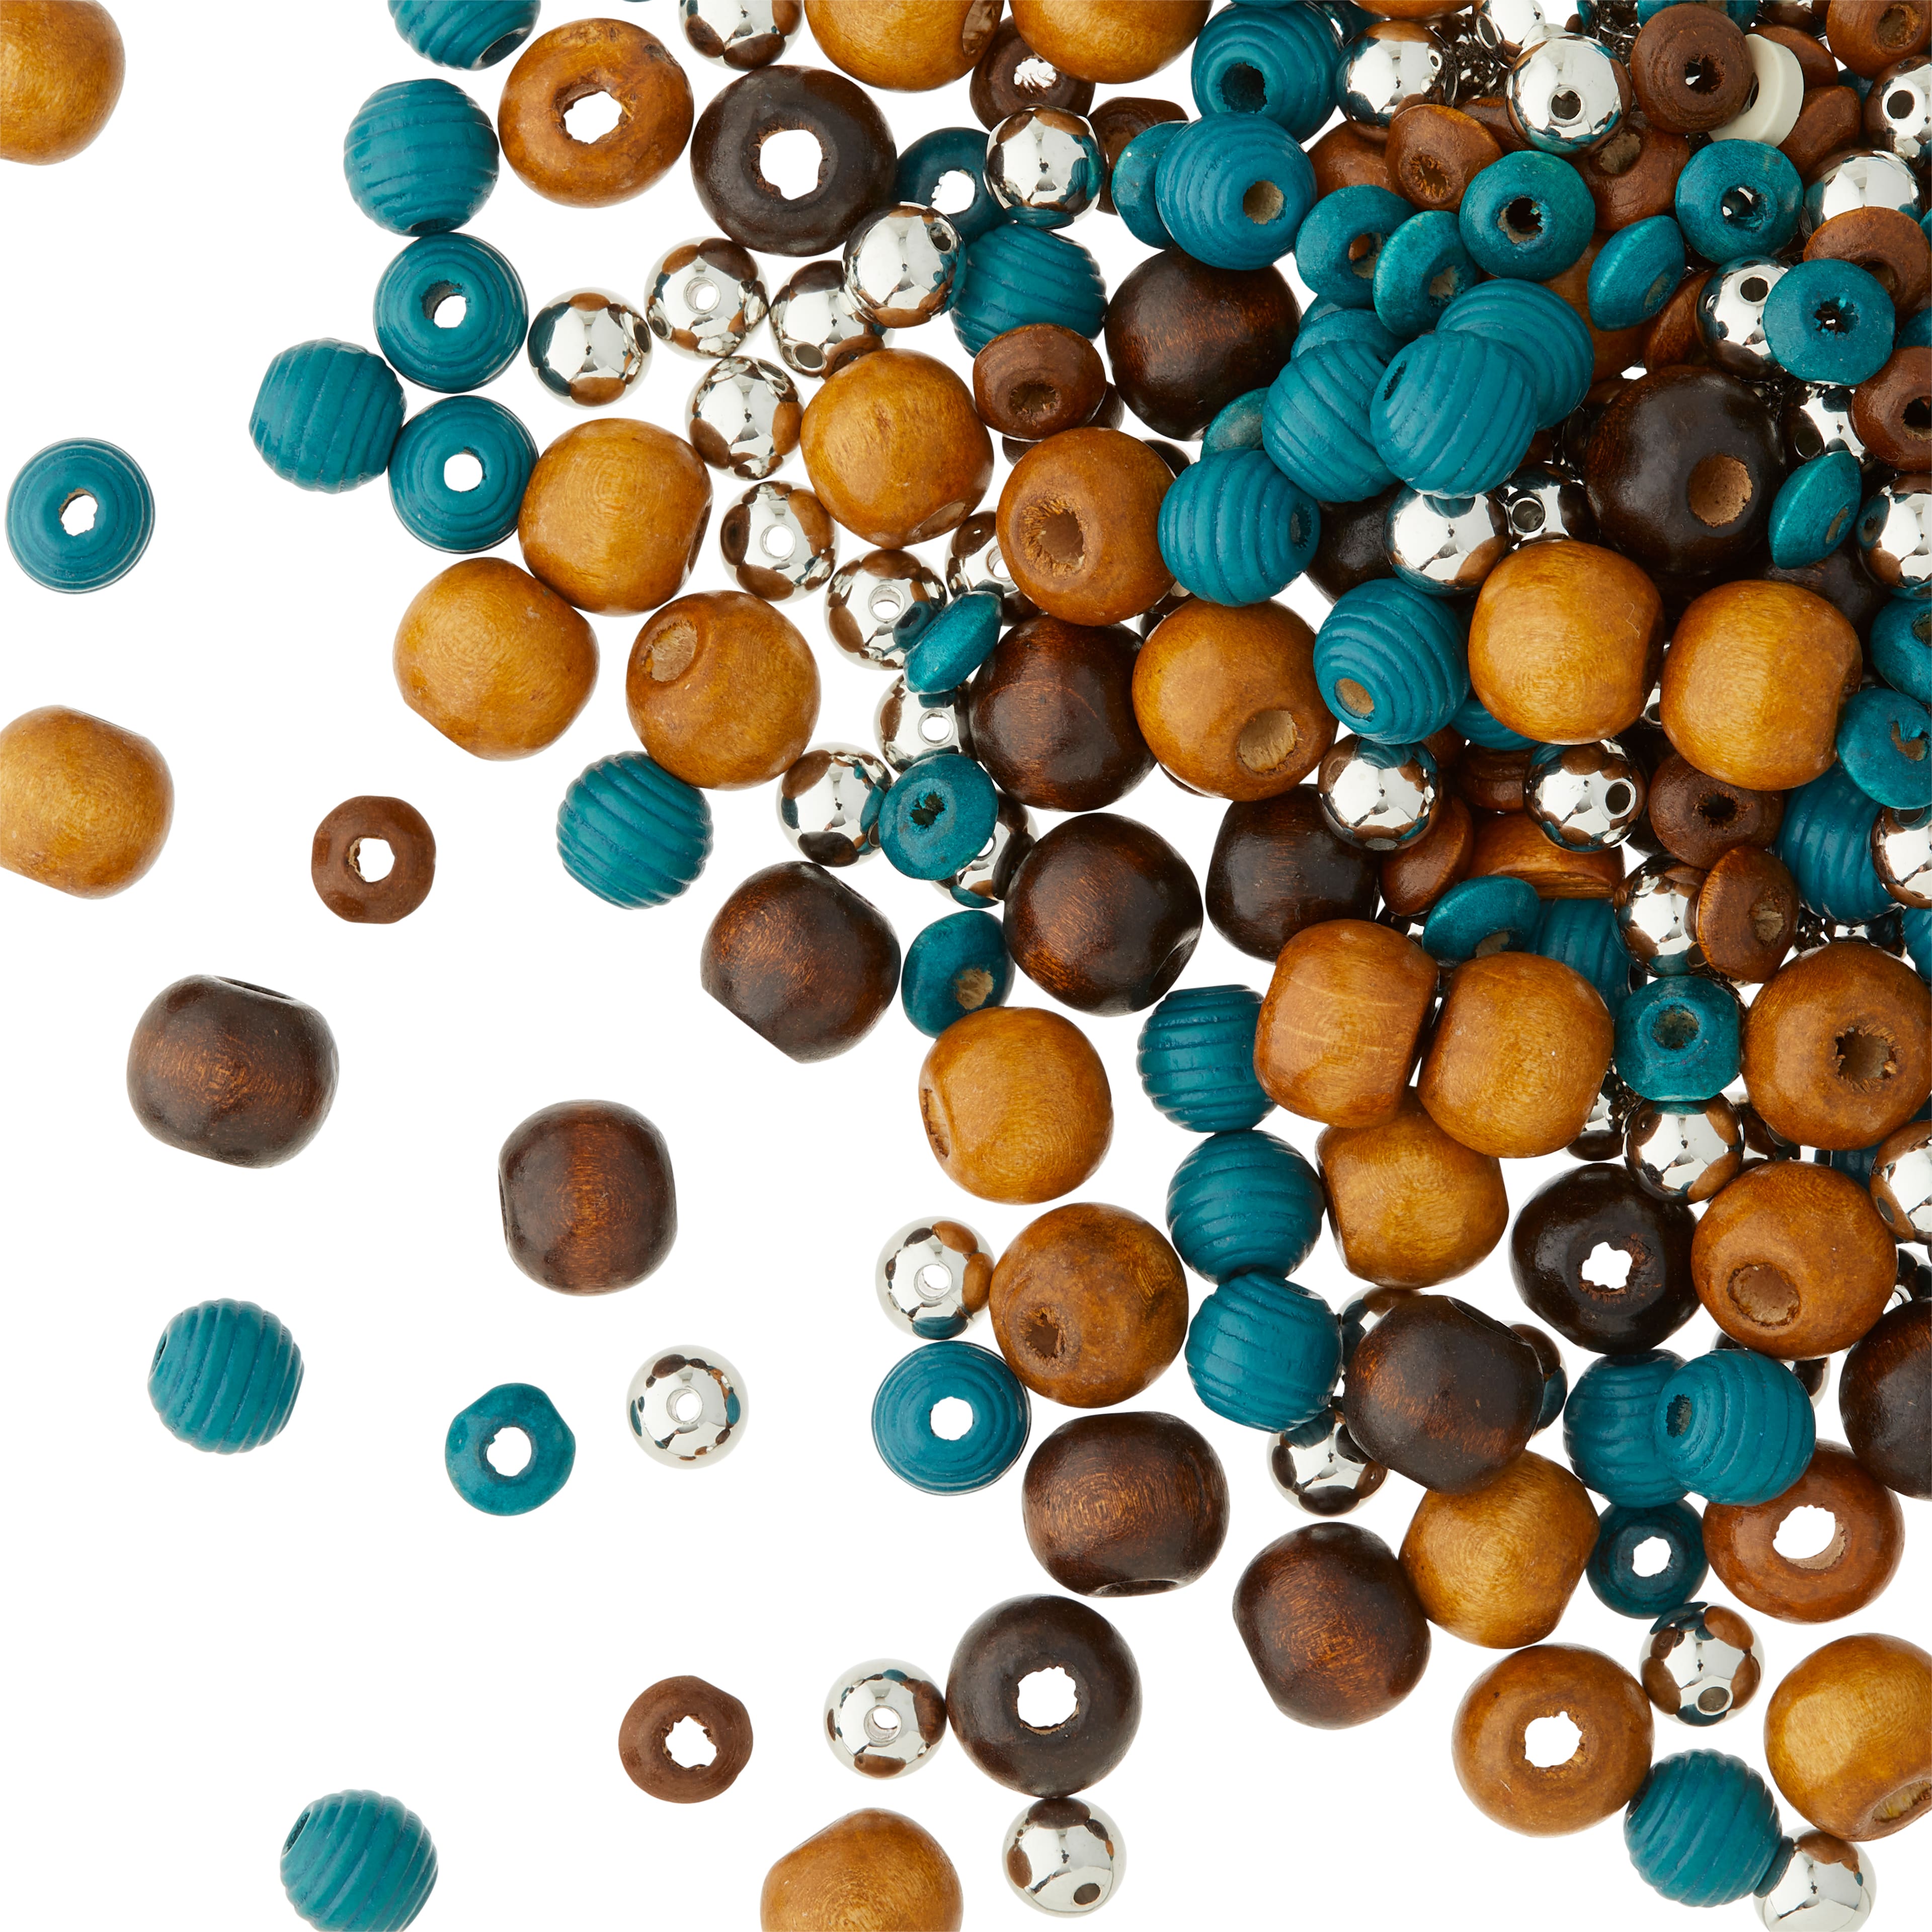 12 Mm Turquoise Round Wood Beads, 50 Beads, 4 Mm Hole, Macrame